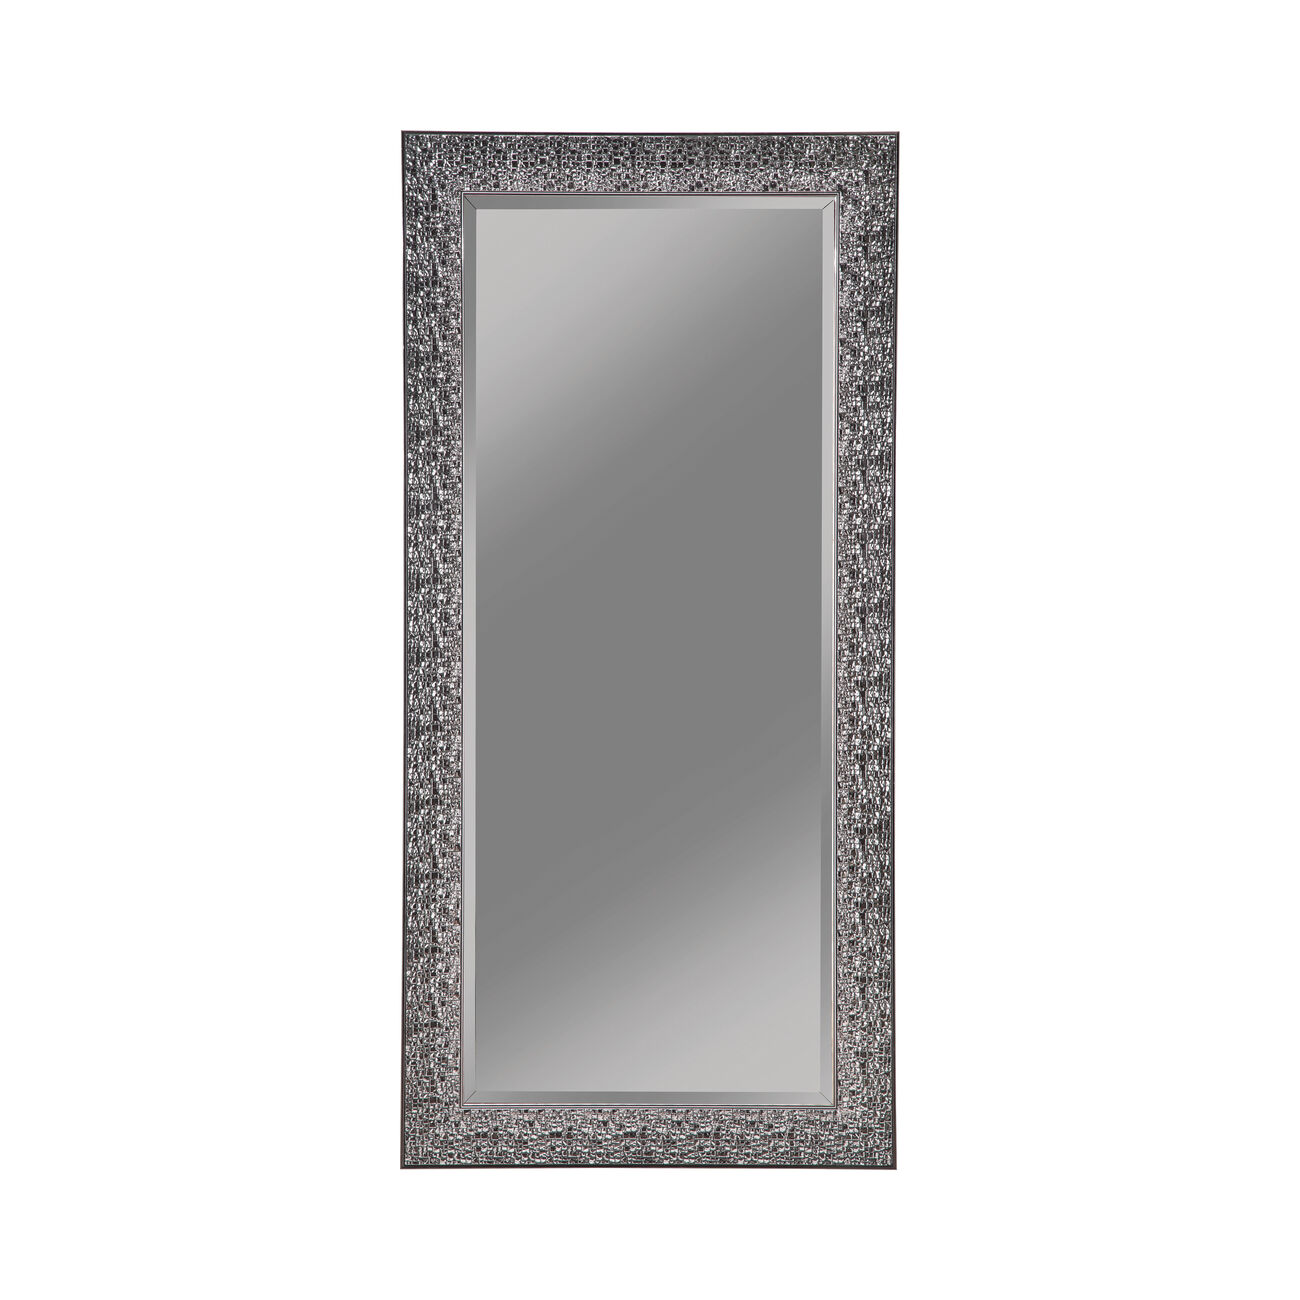 Rectangular Beveled Accent Floor Mirror with Glitter Mosaic Pattern, Gray